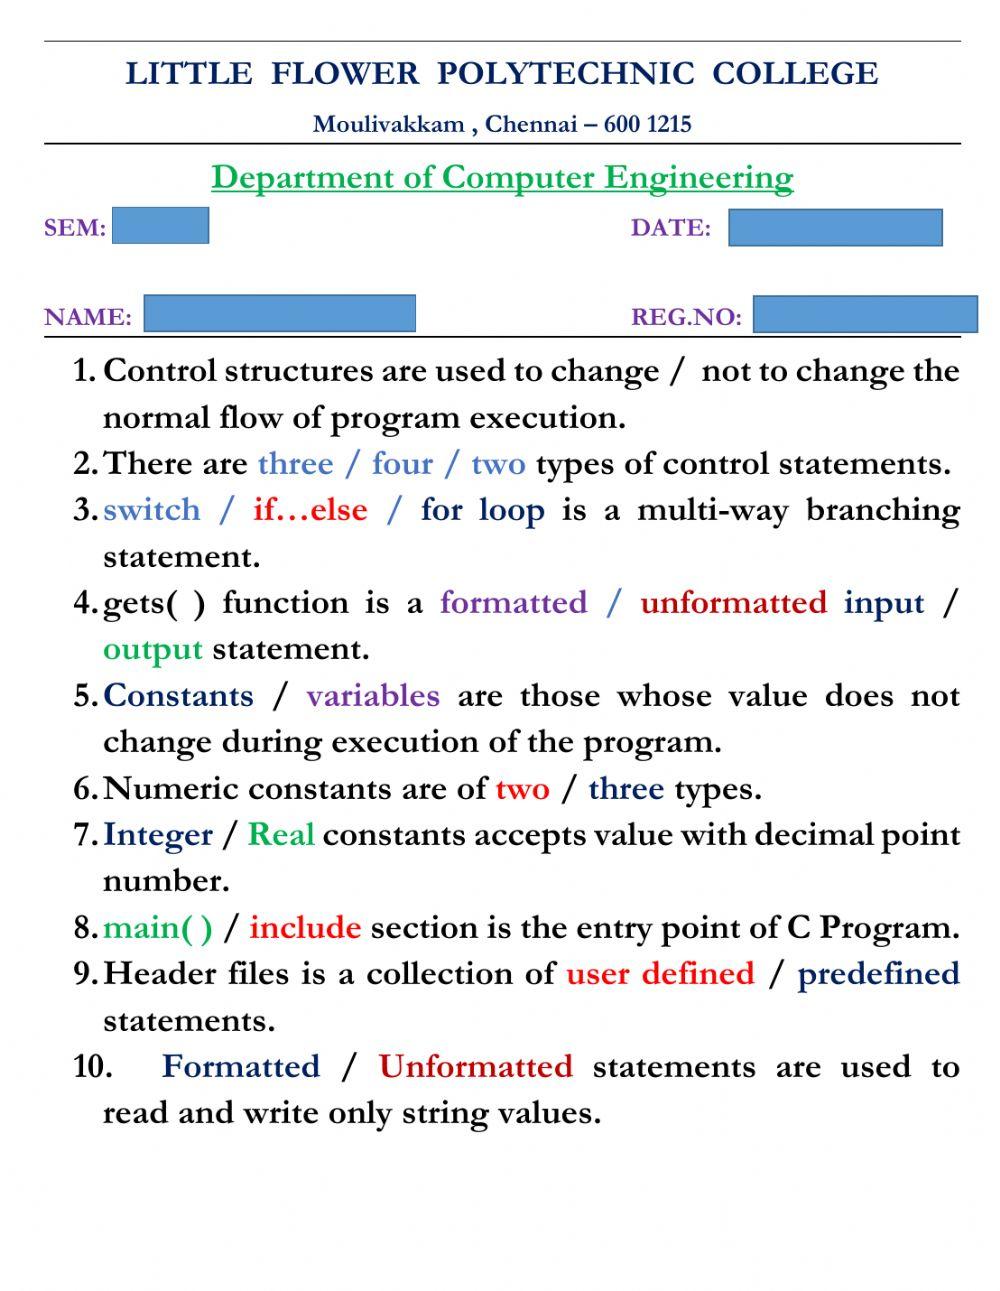 C programming